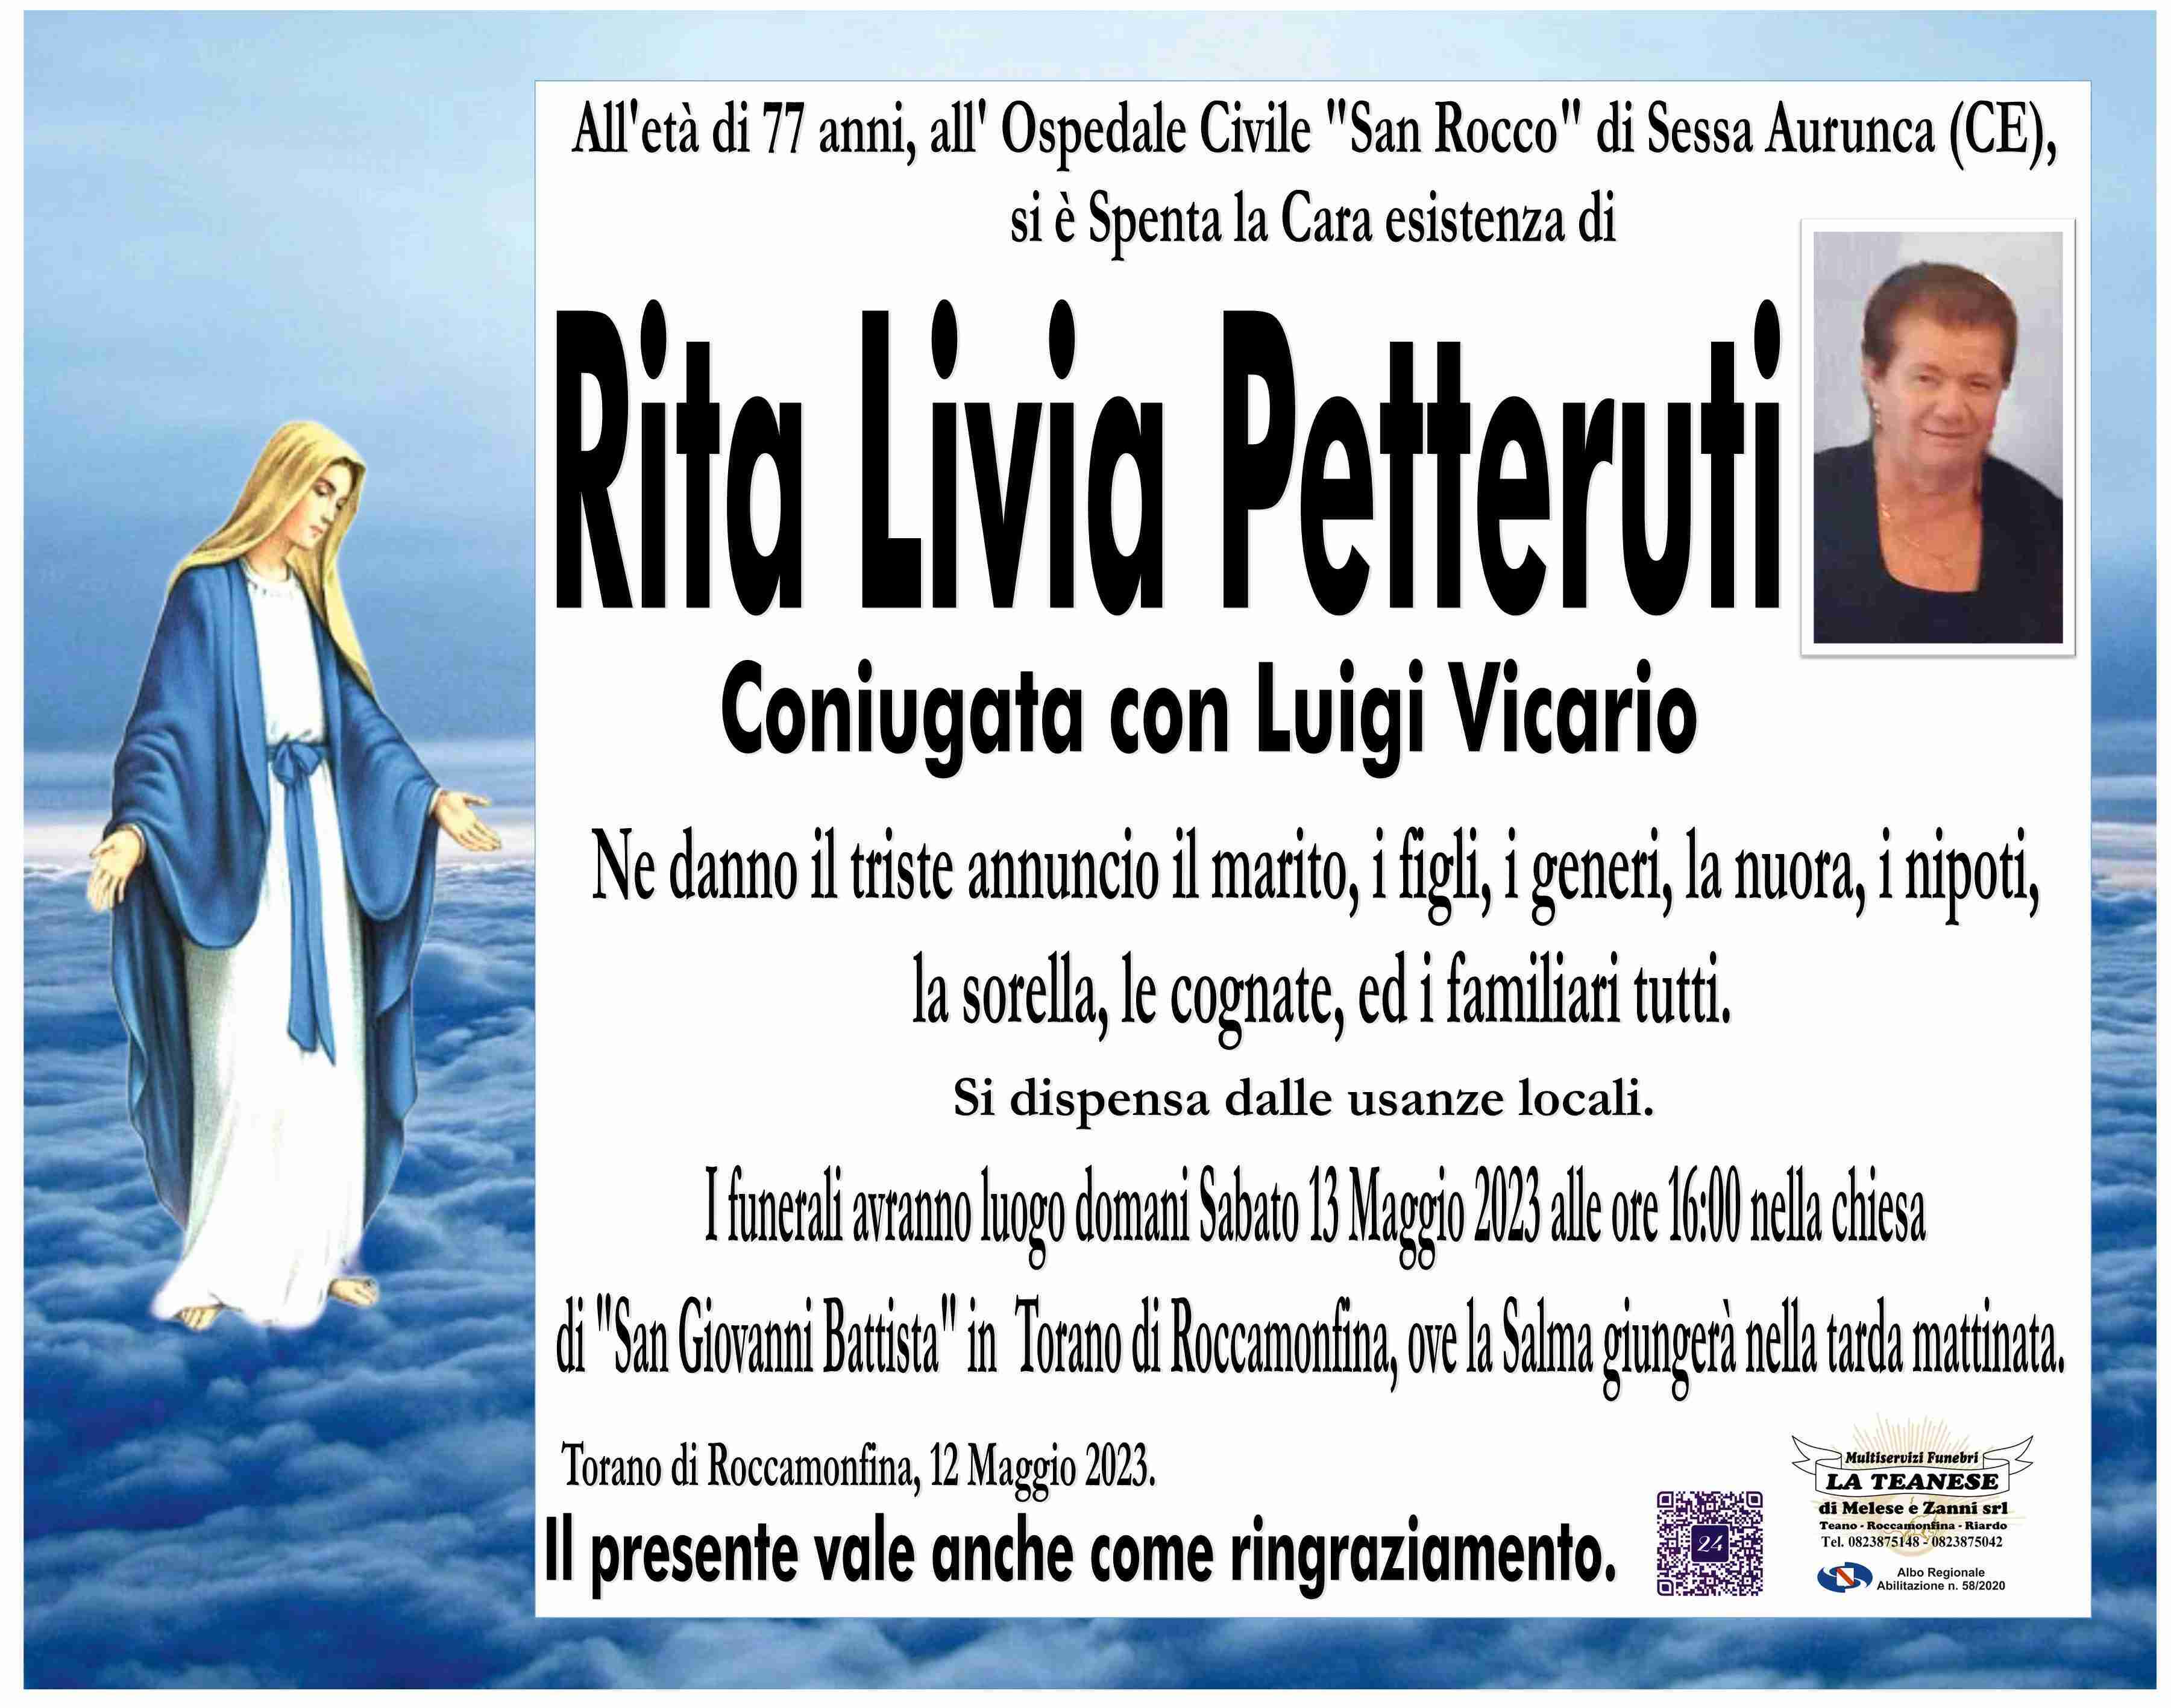 Rita Livia Petteruti